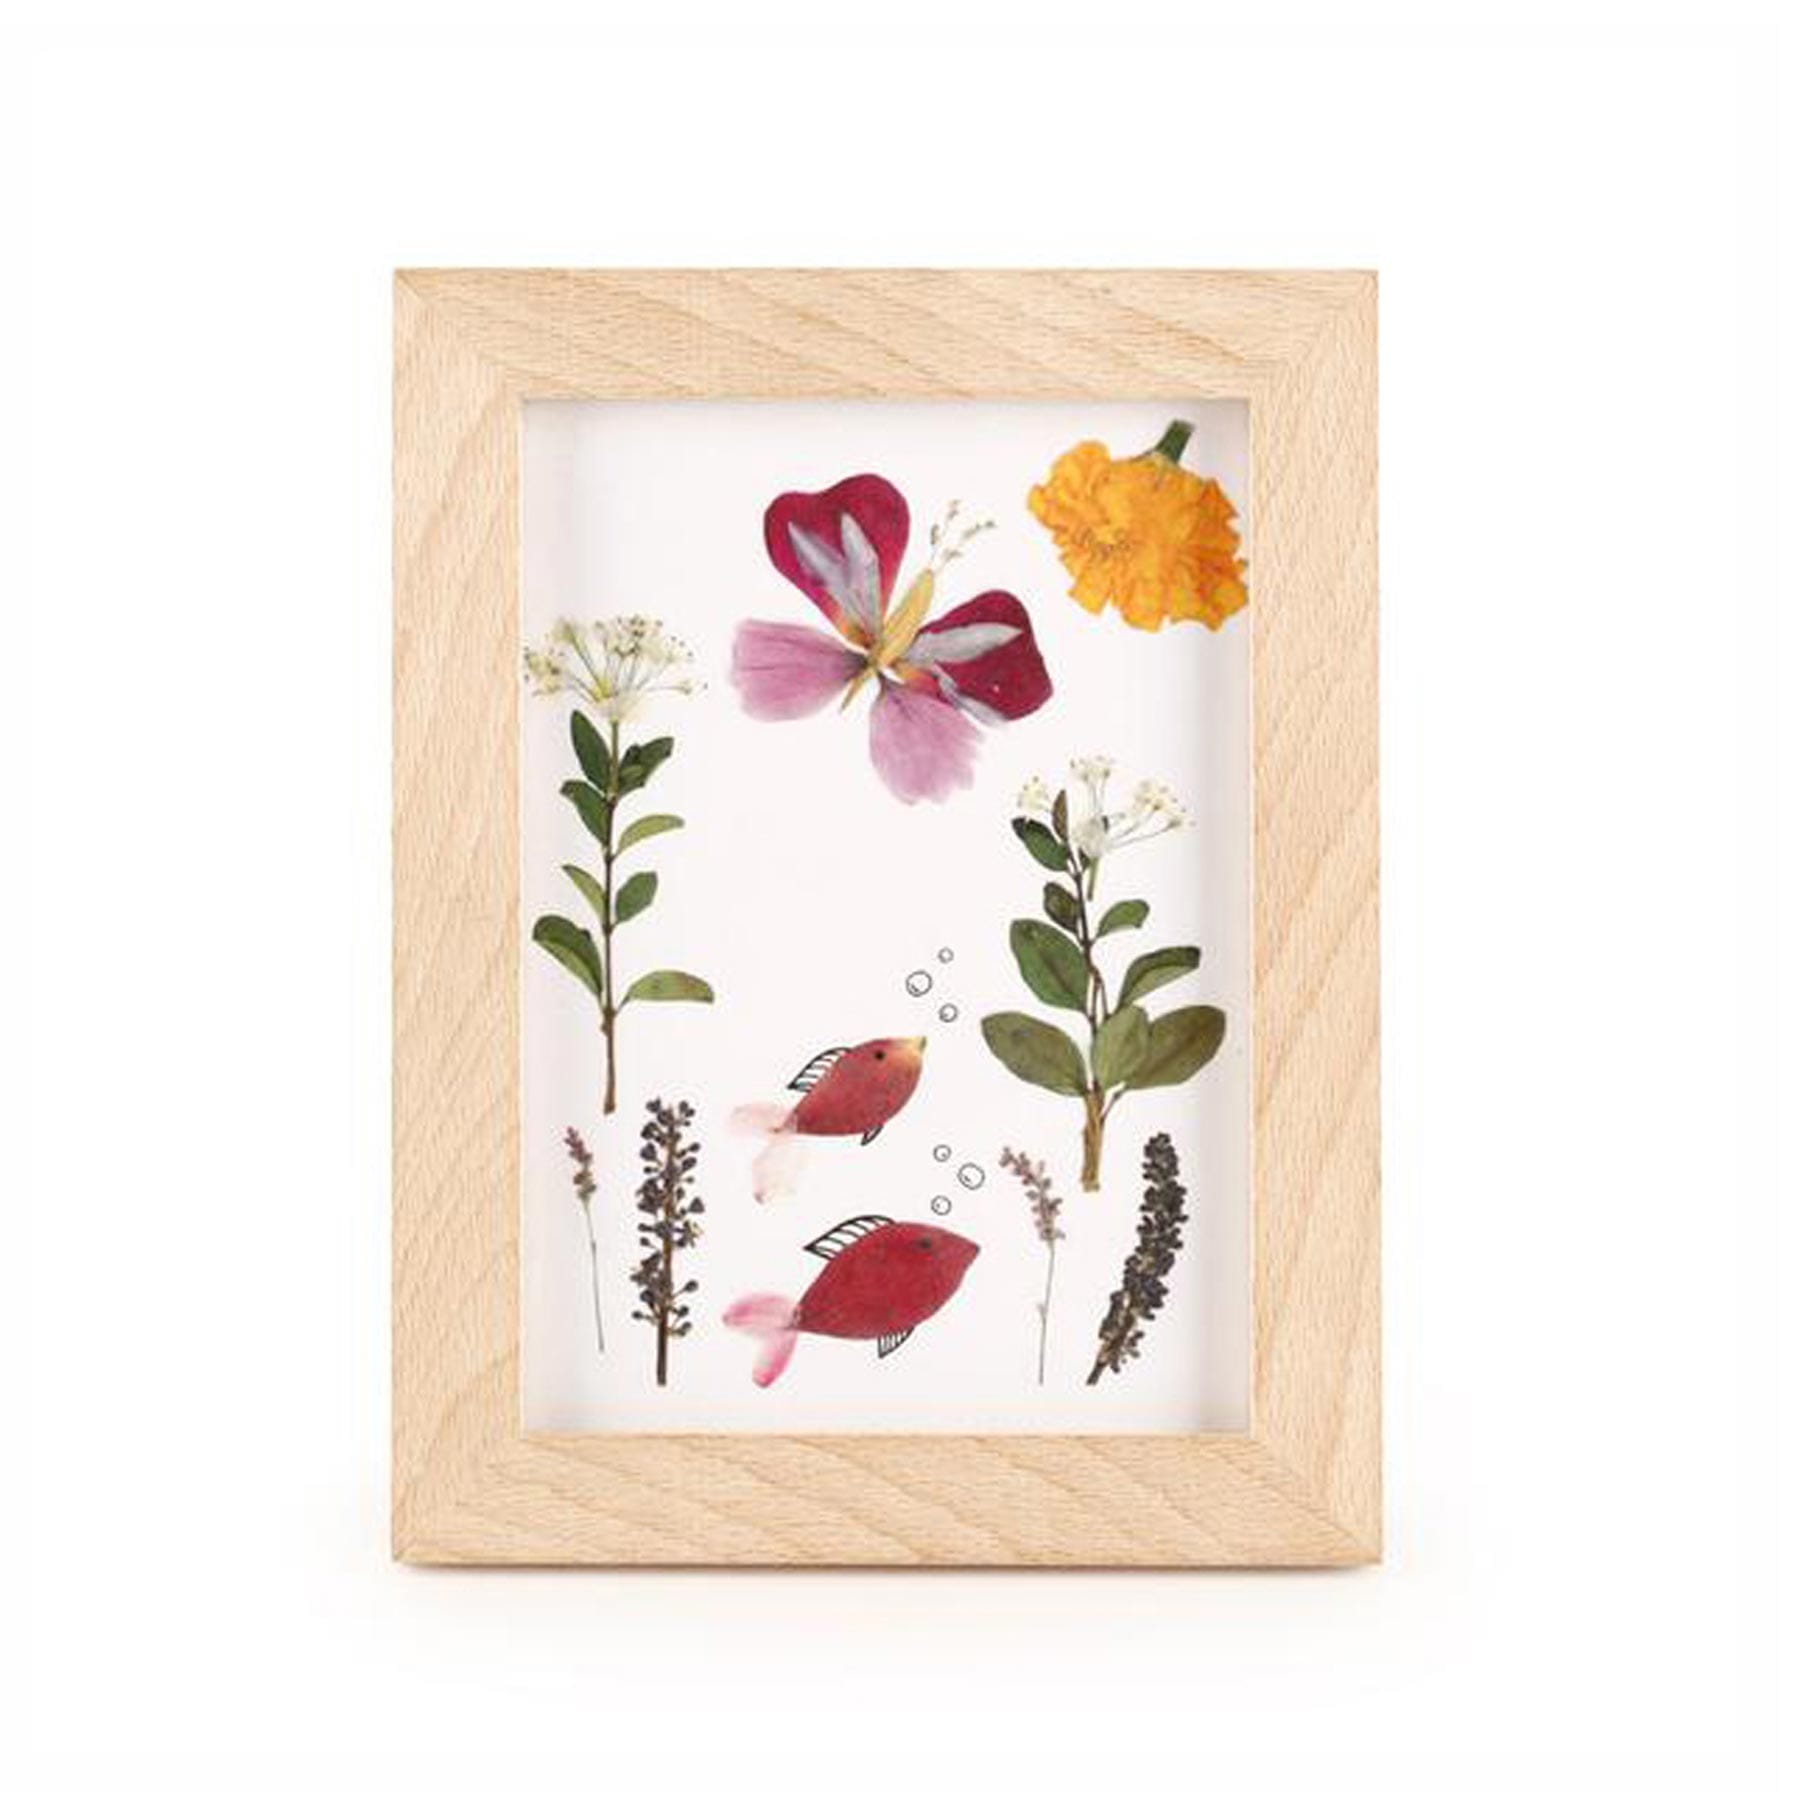 Huckleberry pressed flower frame art